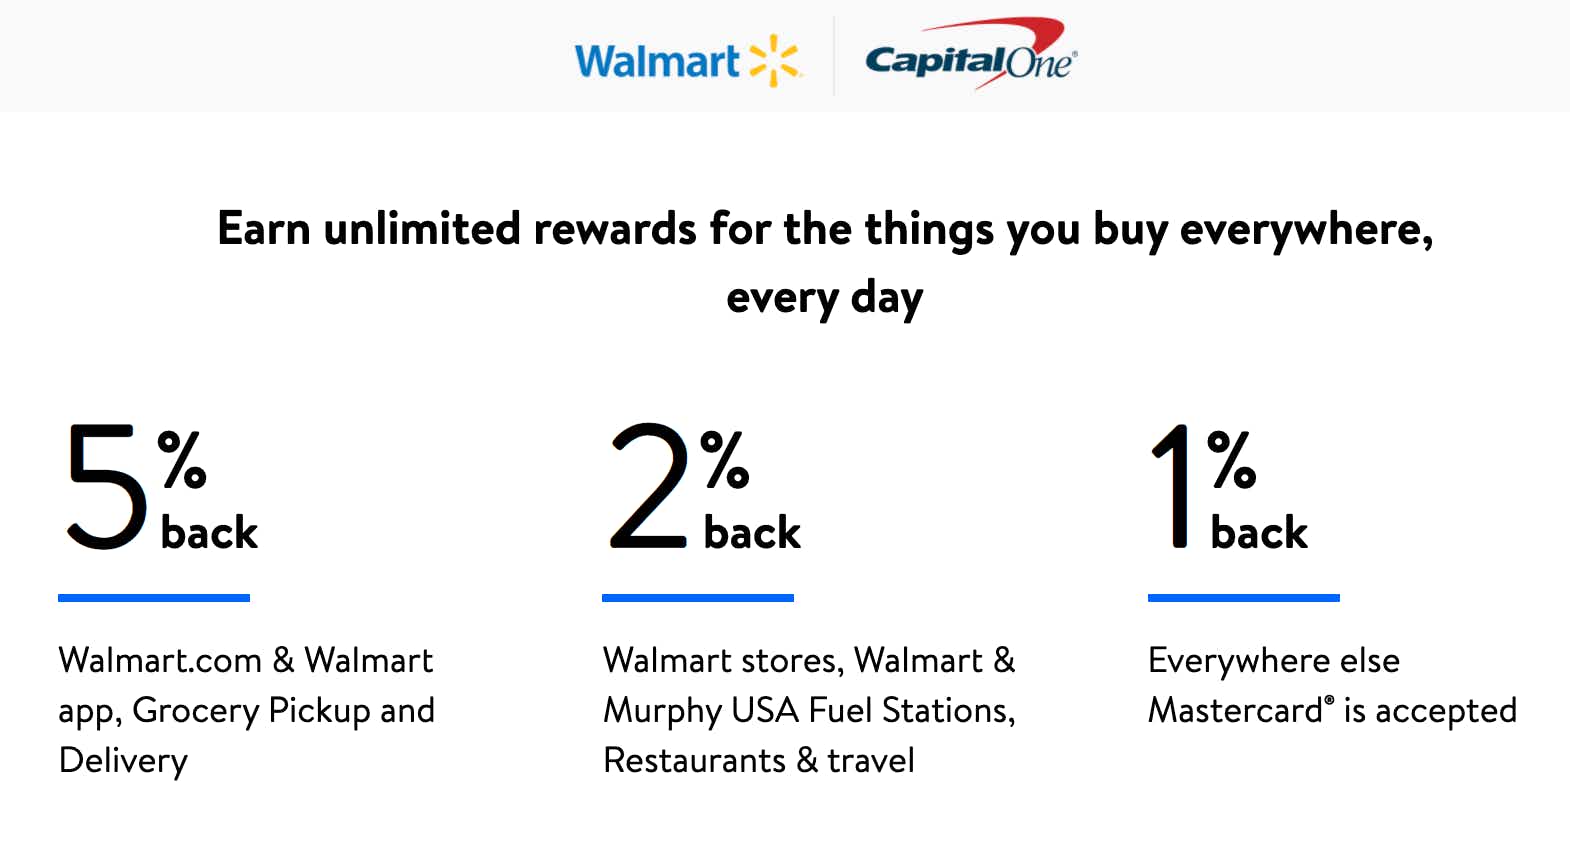 Walmart capital one rewards card information